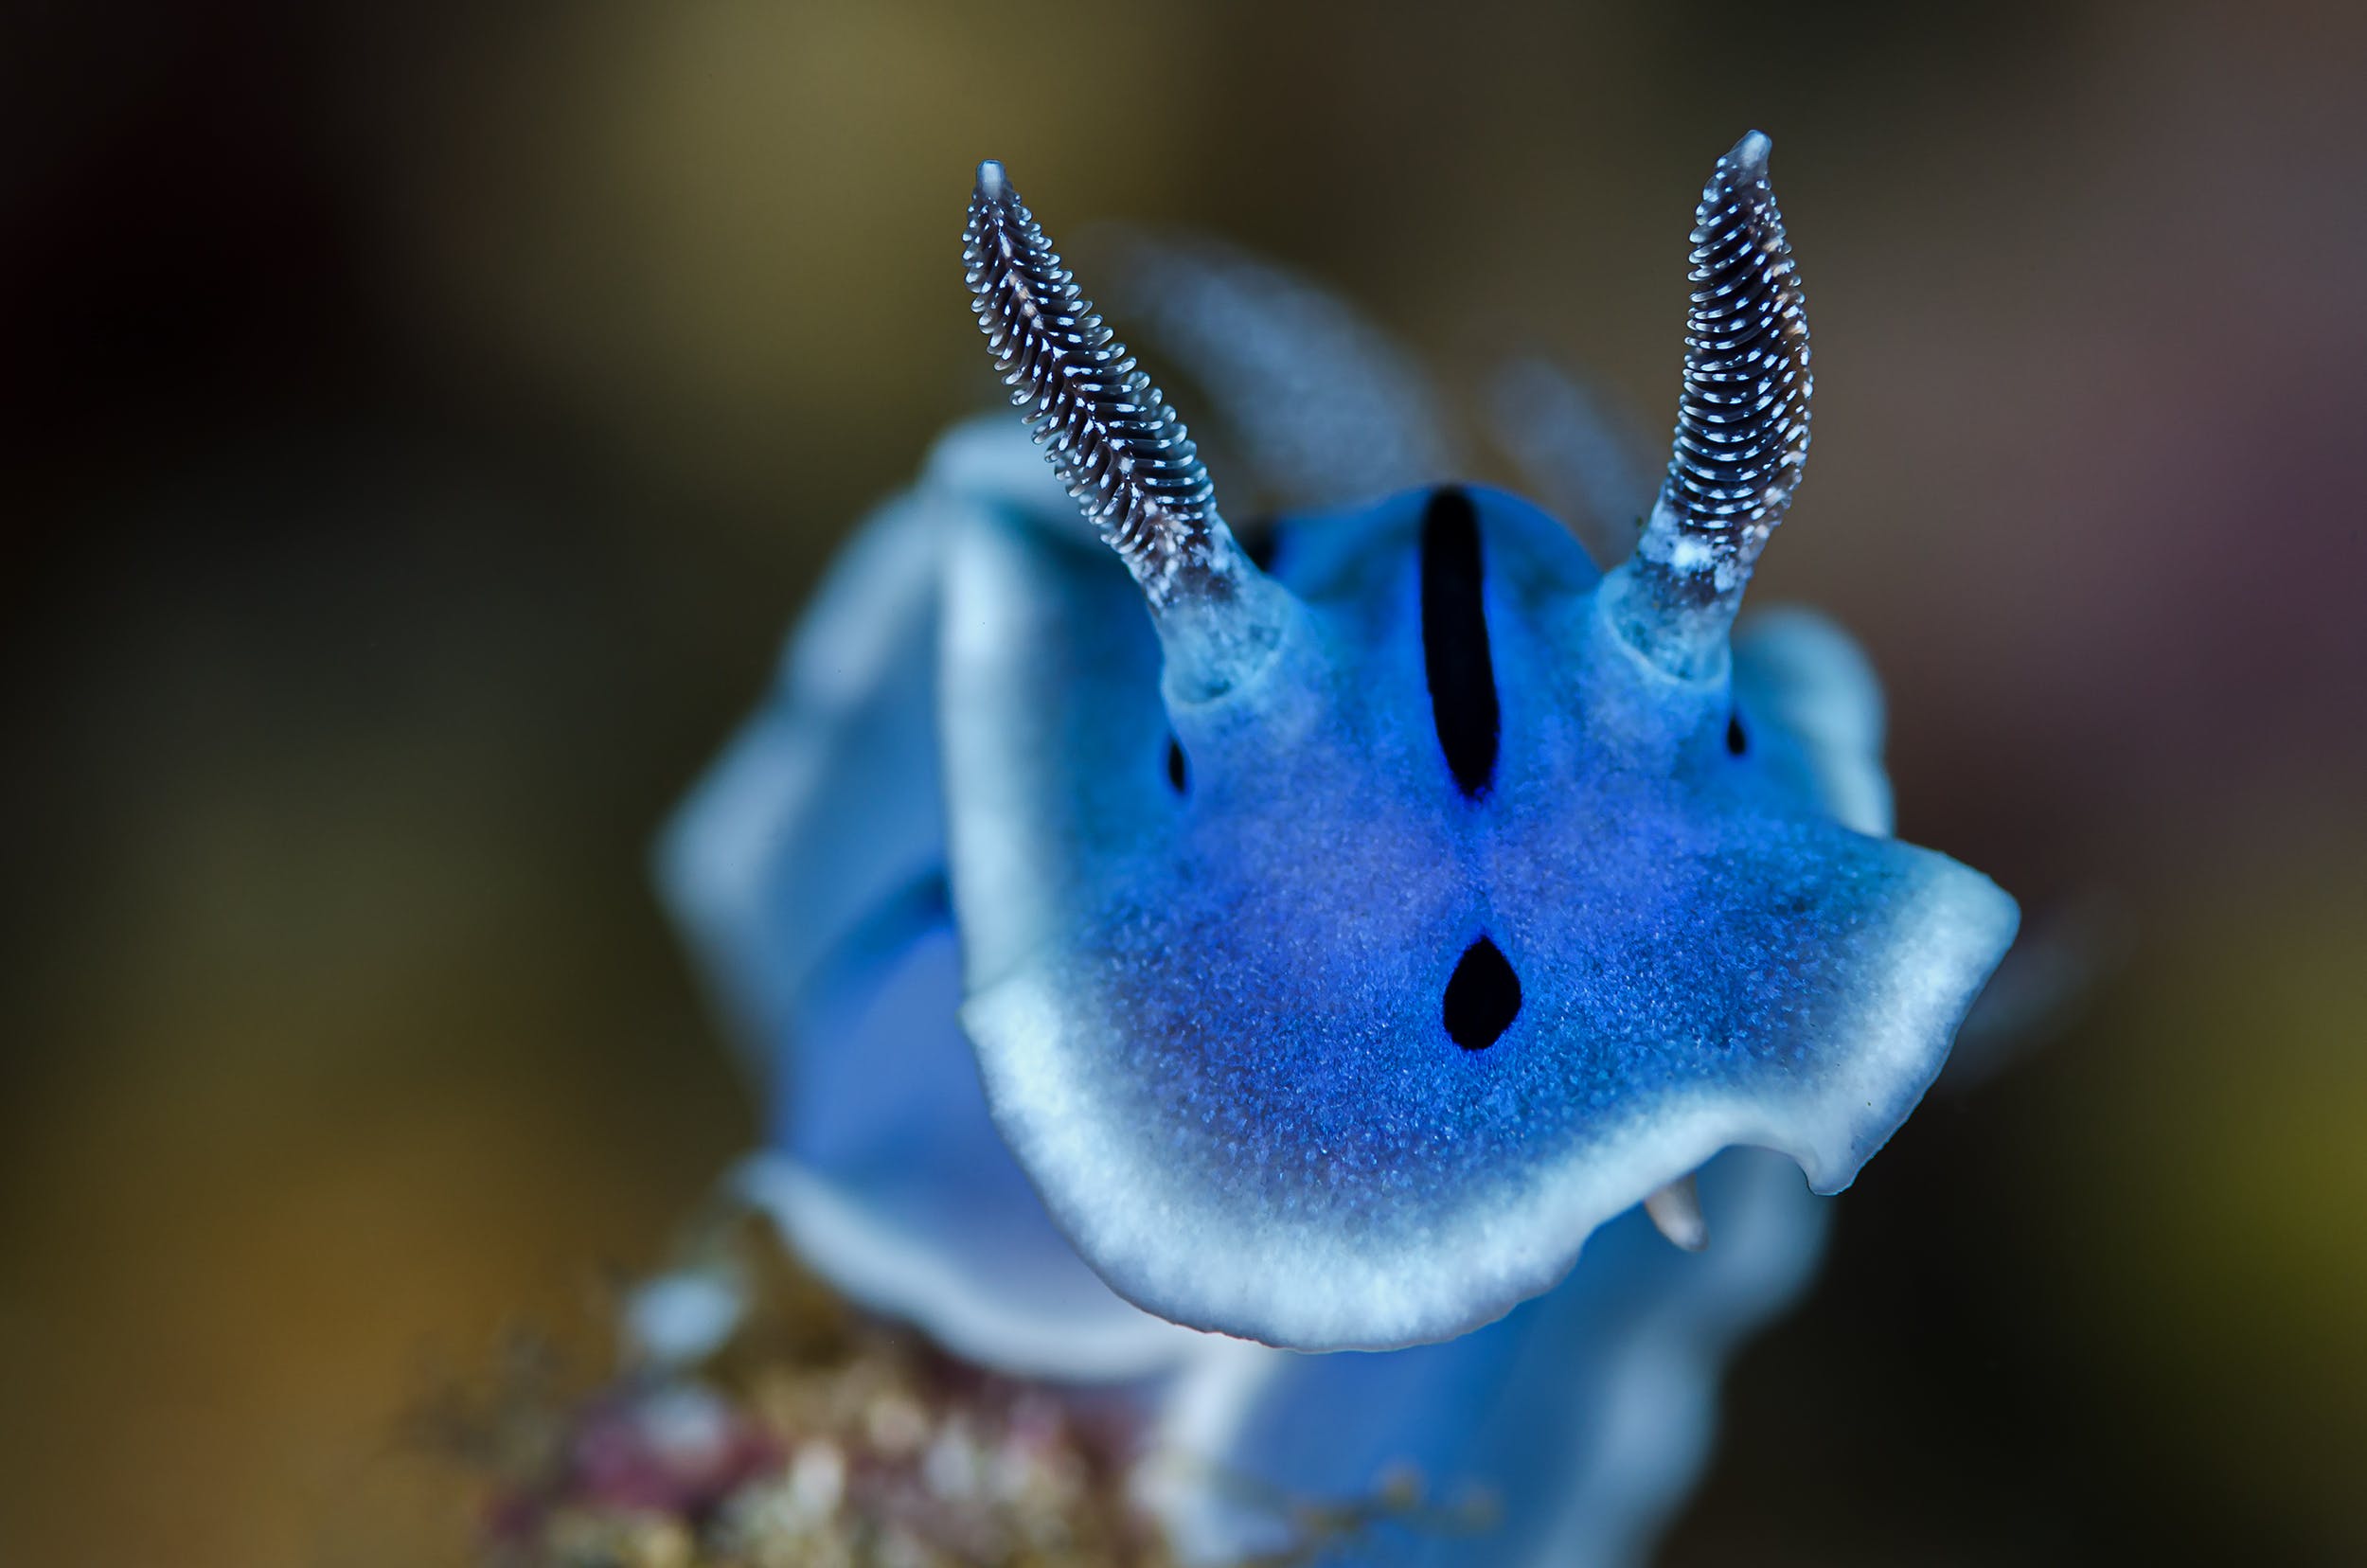 Gratis Fotos de stock gratuitas de animales acuáticos, azul, babosa Foto de stock